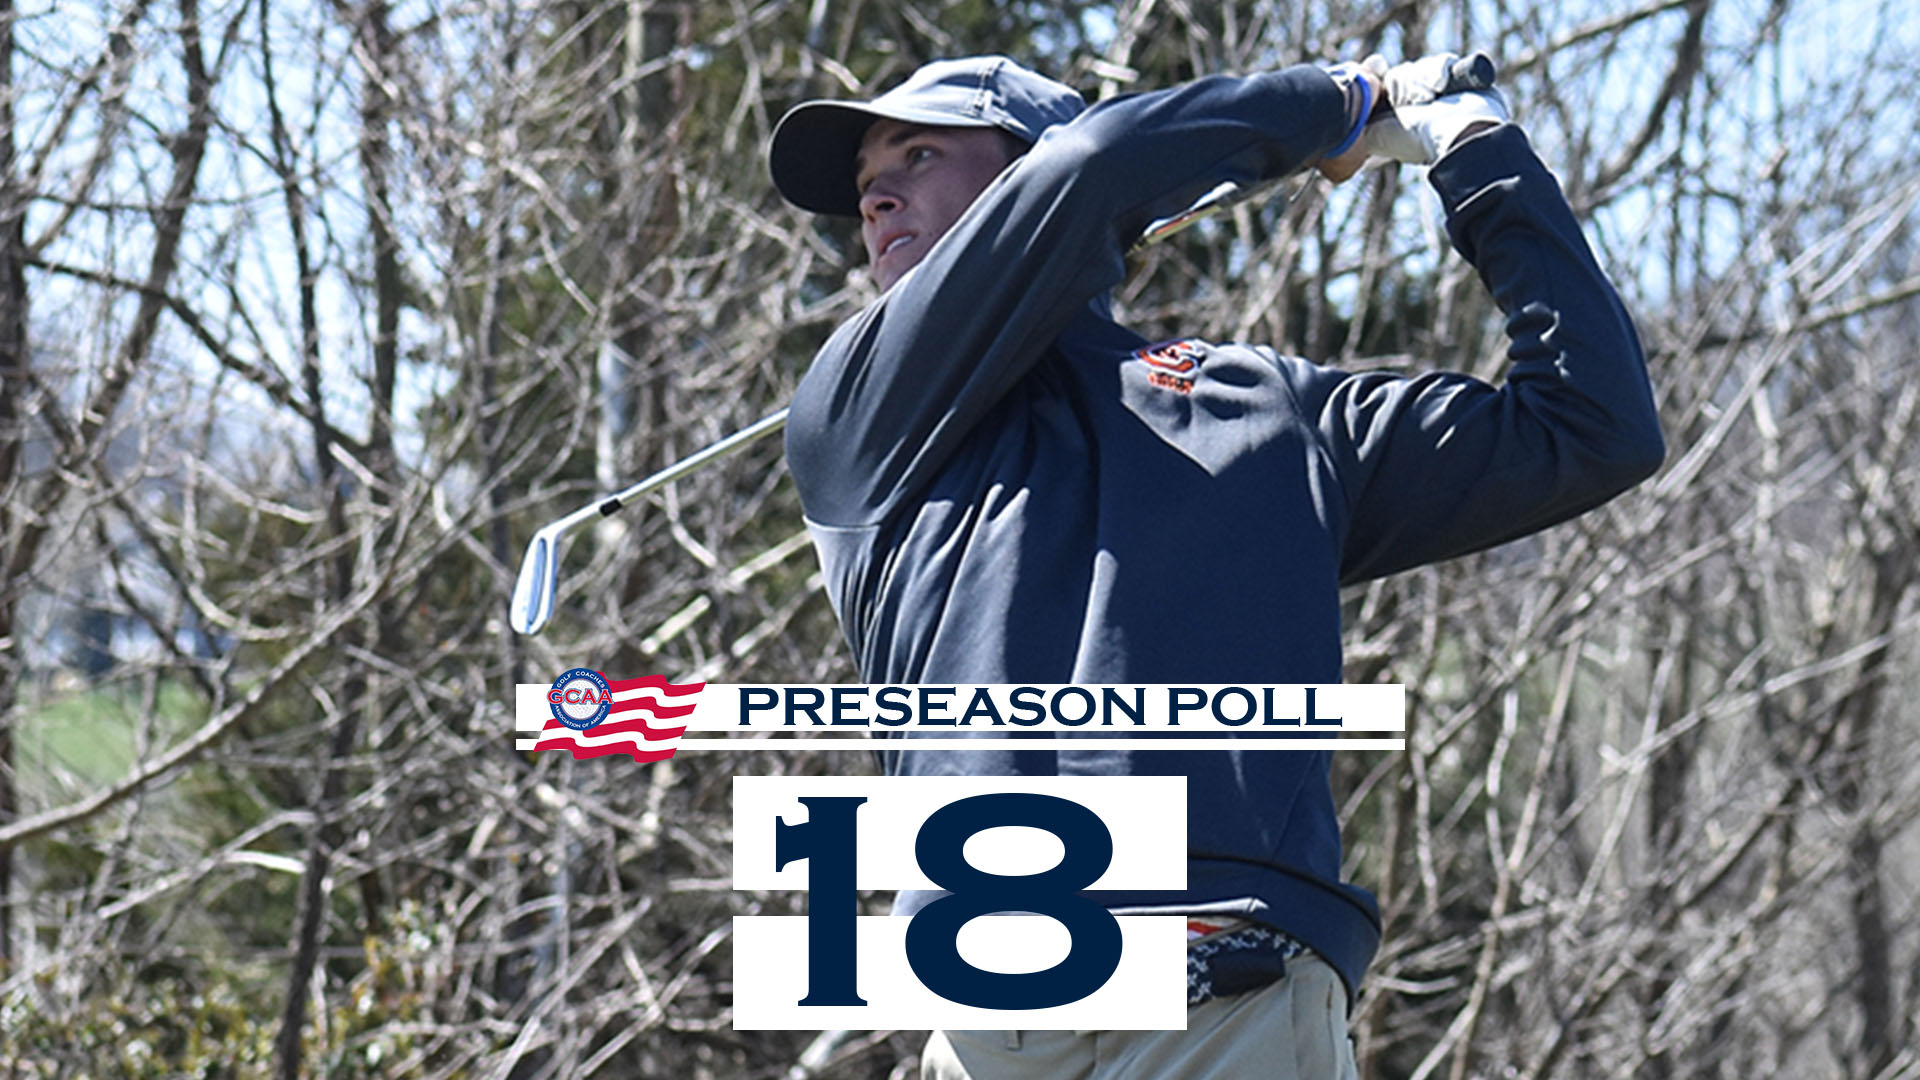 Bushnell Golfweek Preseason Poll puts Eagles at 18th